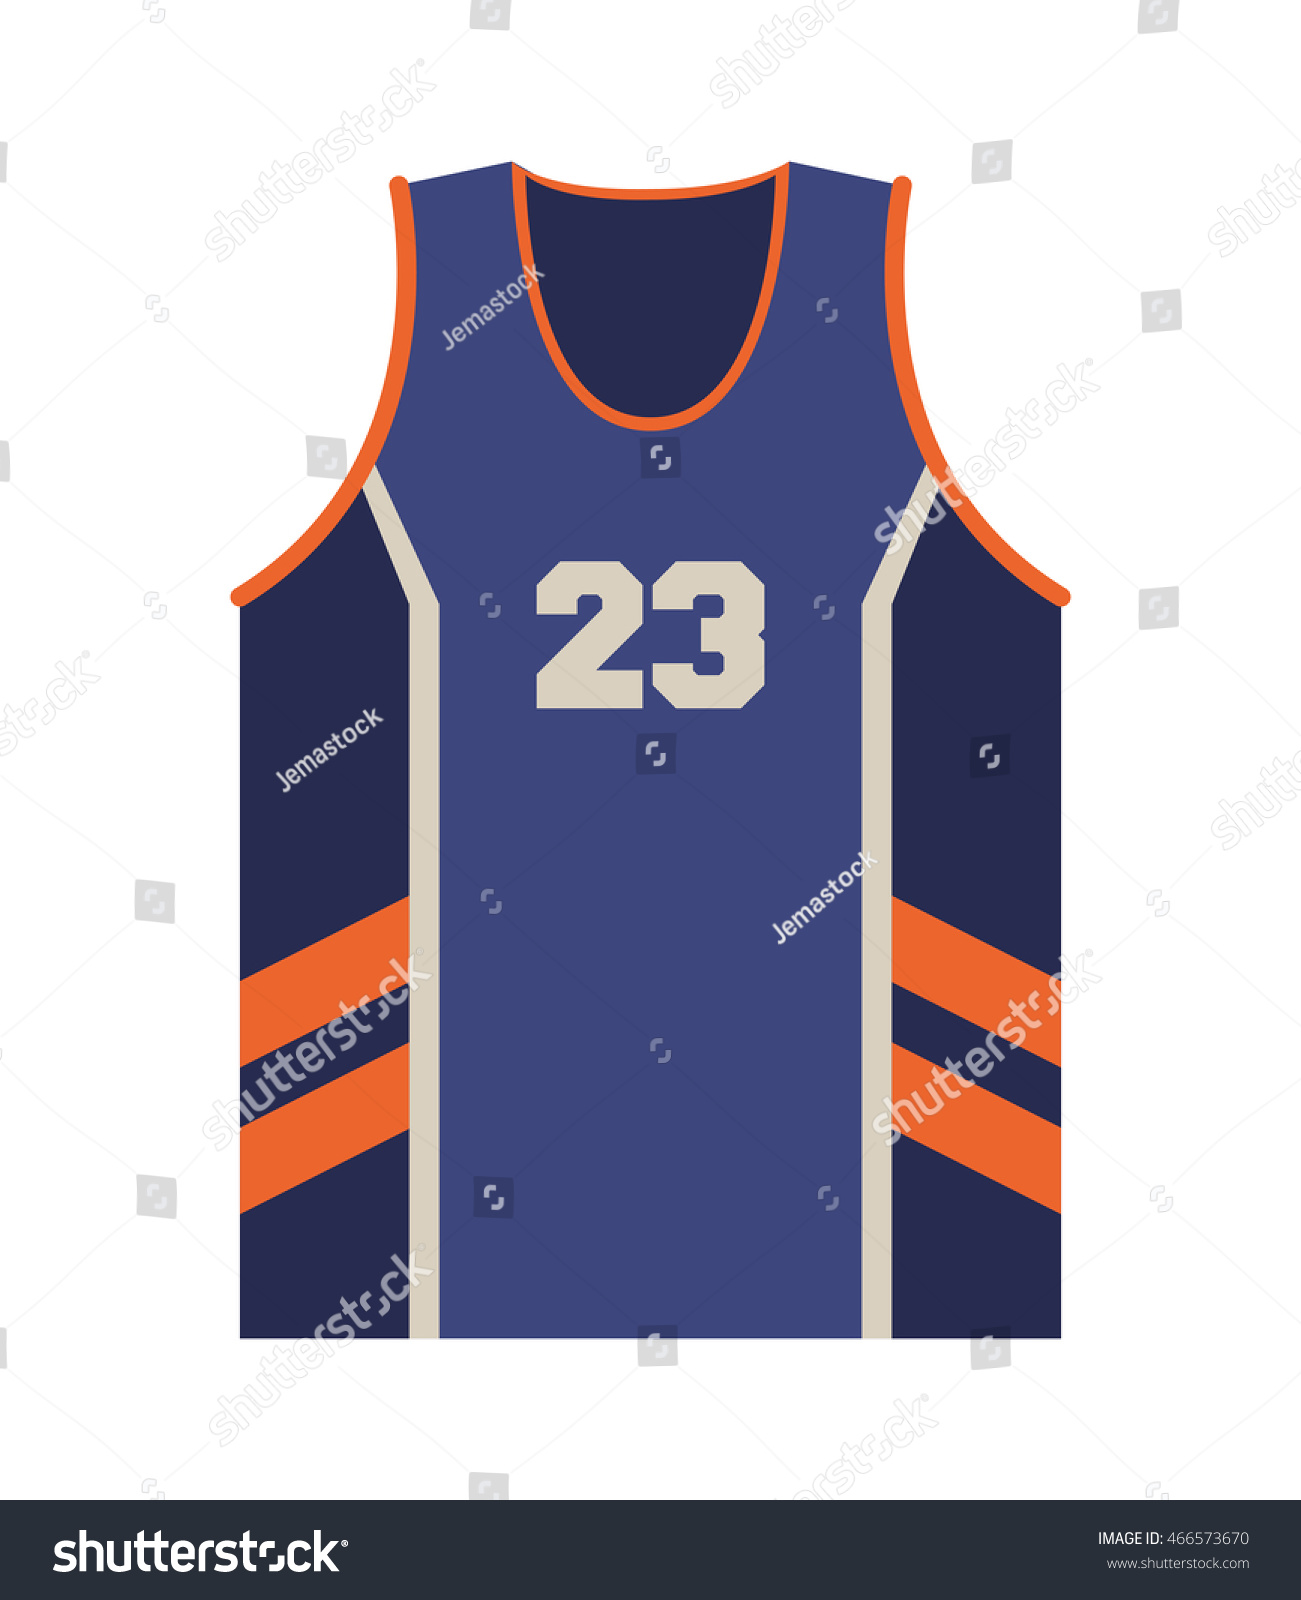 Flat Design Basketball Jersey Icon Vector Illustration - 466573670 ...